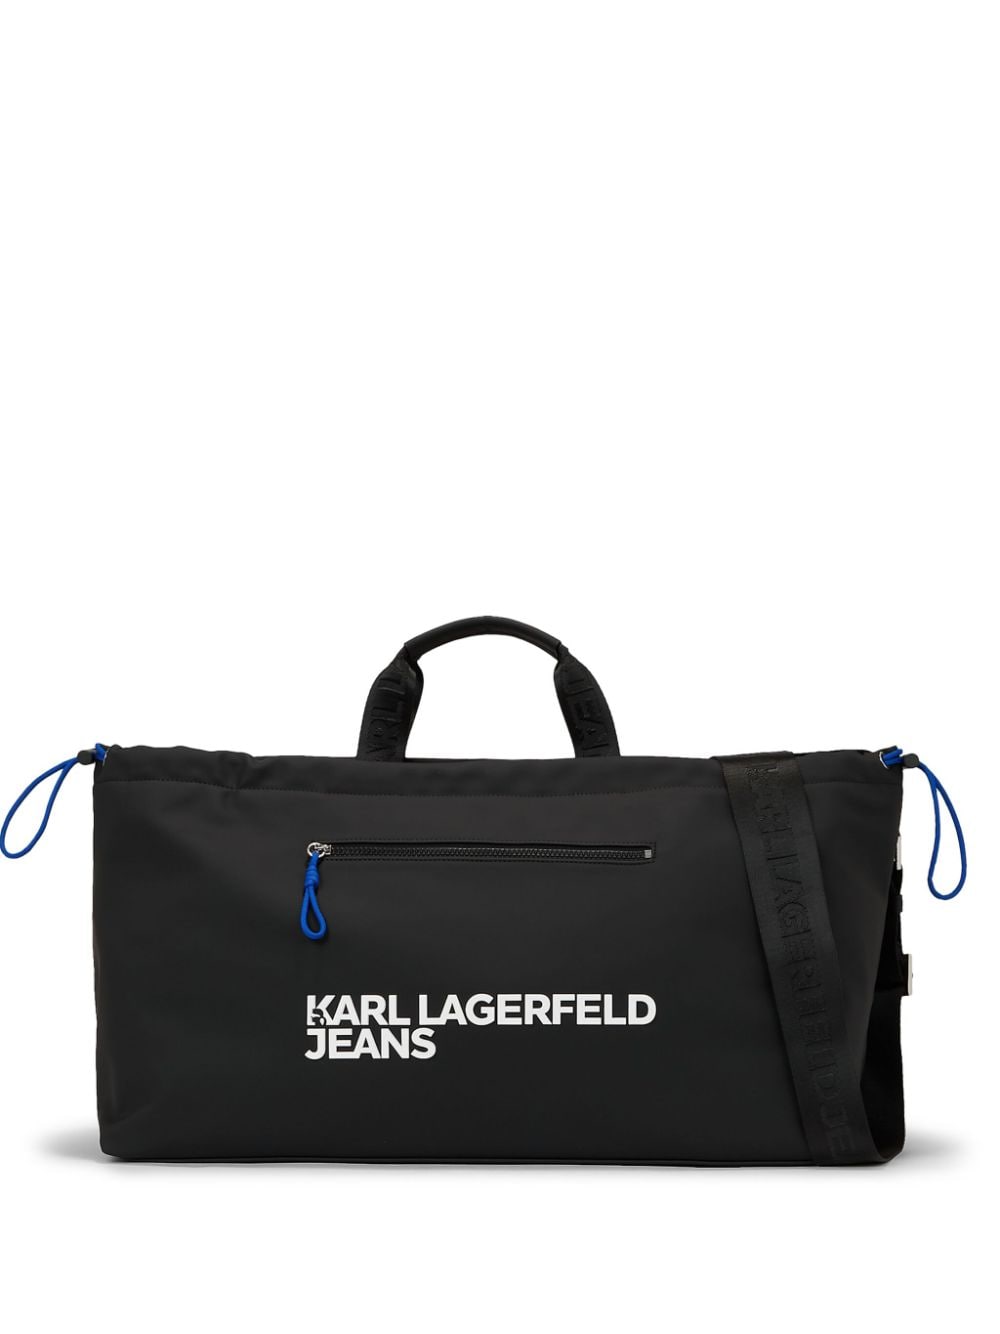 Karl Lagerfeld Jeans Utility Coated Travel Bag In Black